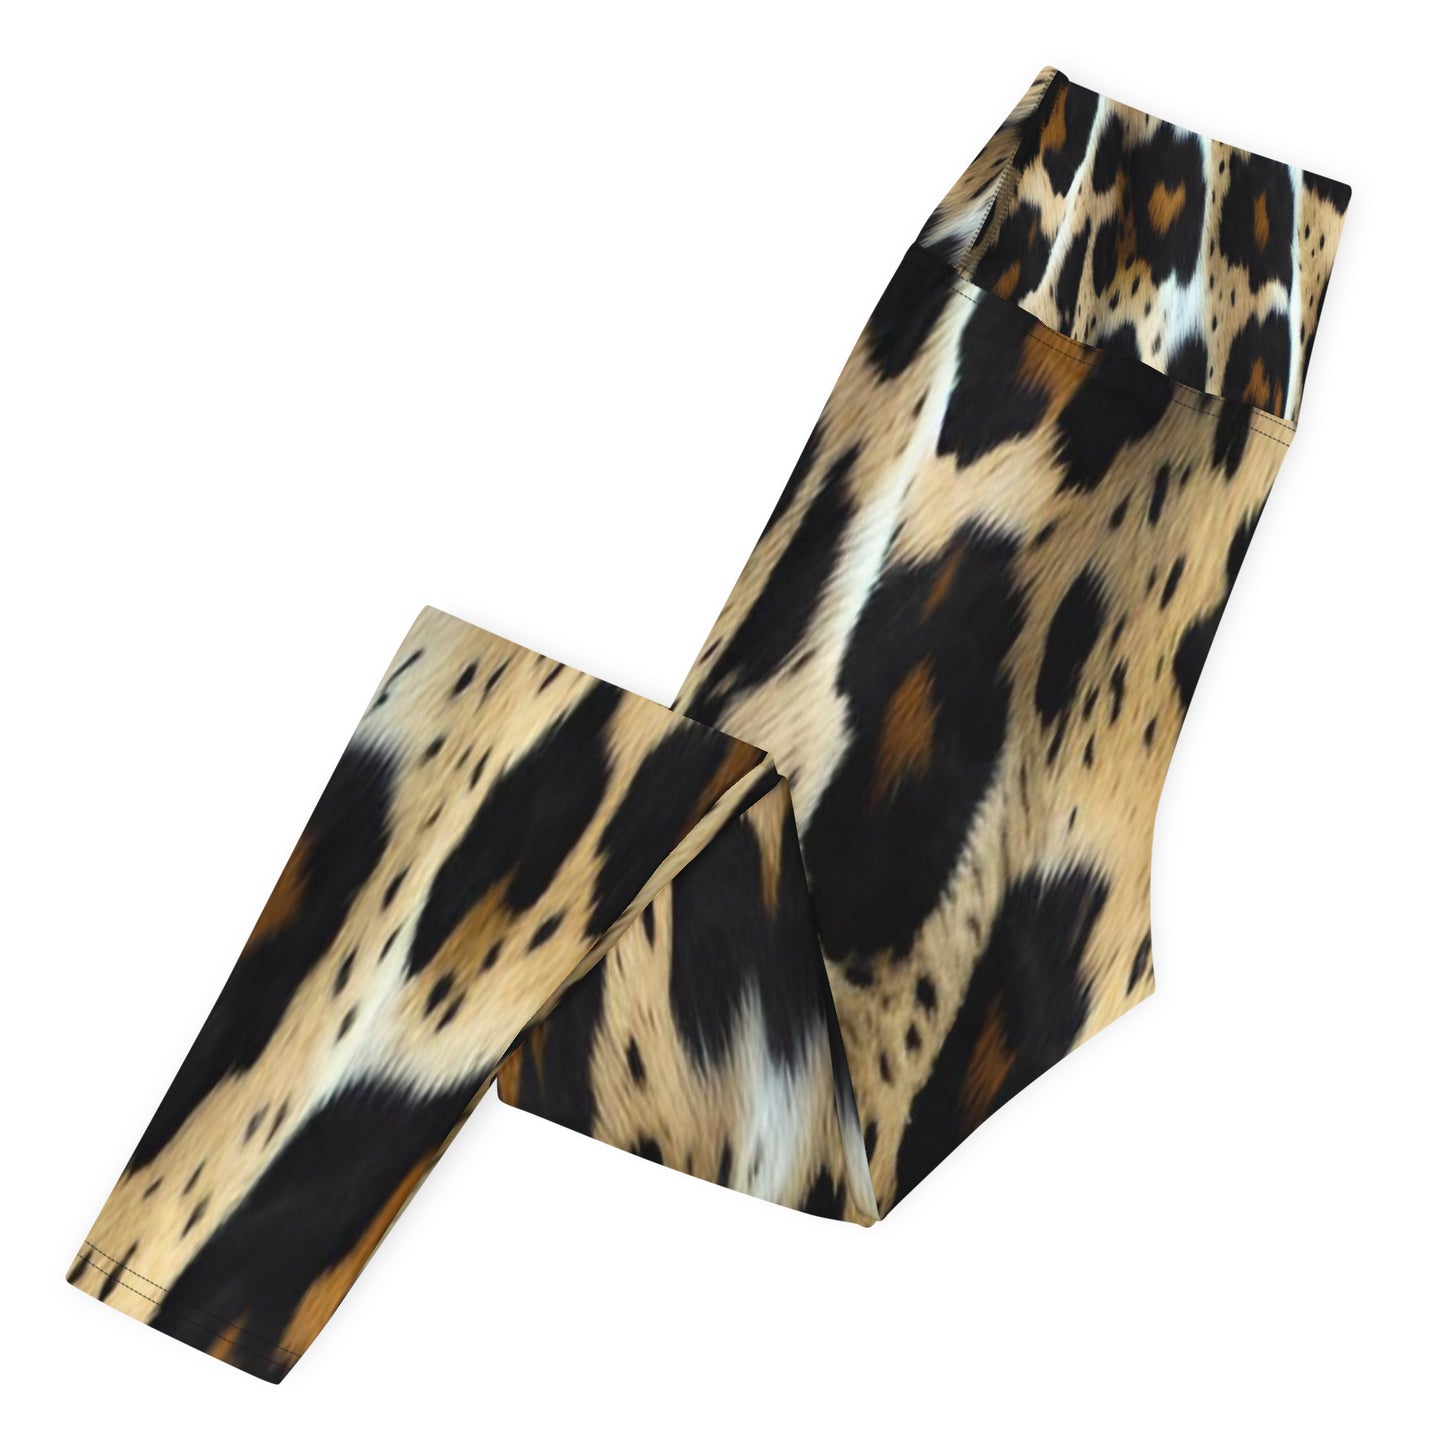 Leopard Print High Quality Yoga Leggings